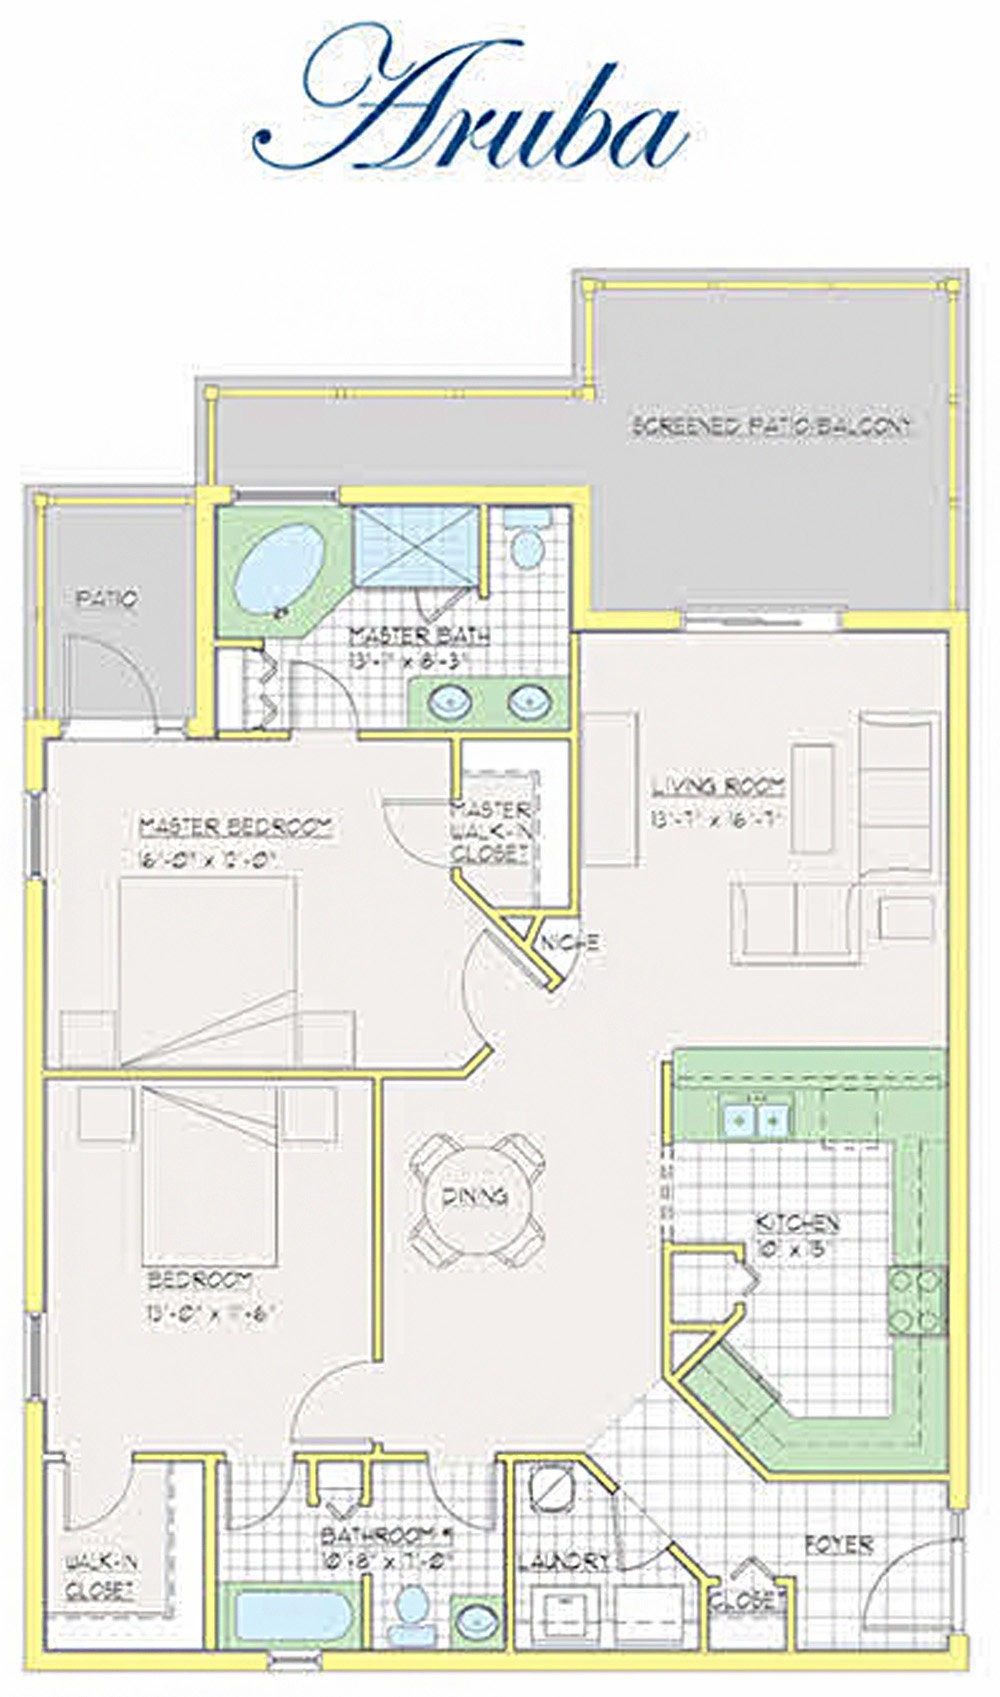 Caribe Cove Aruba Floor Plan 1445 sq ft